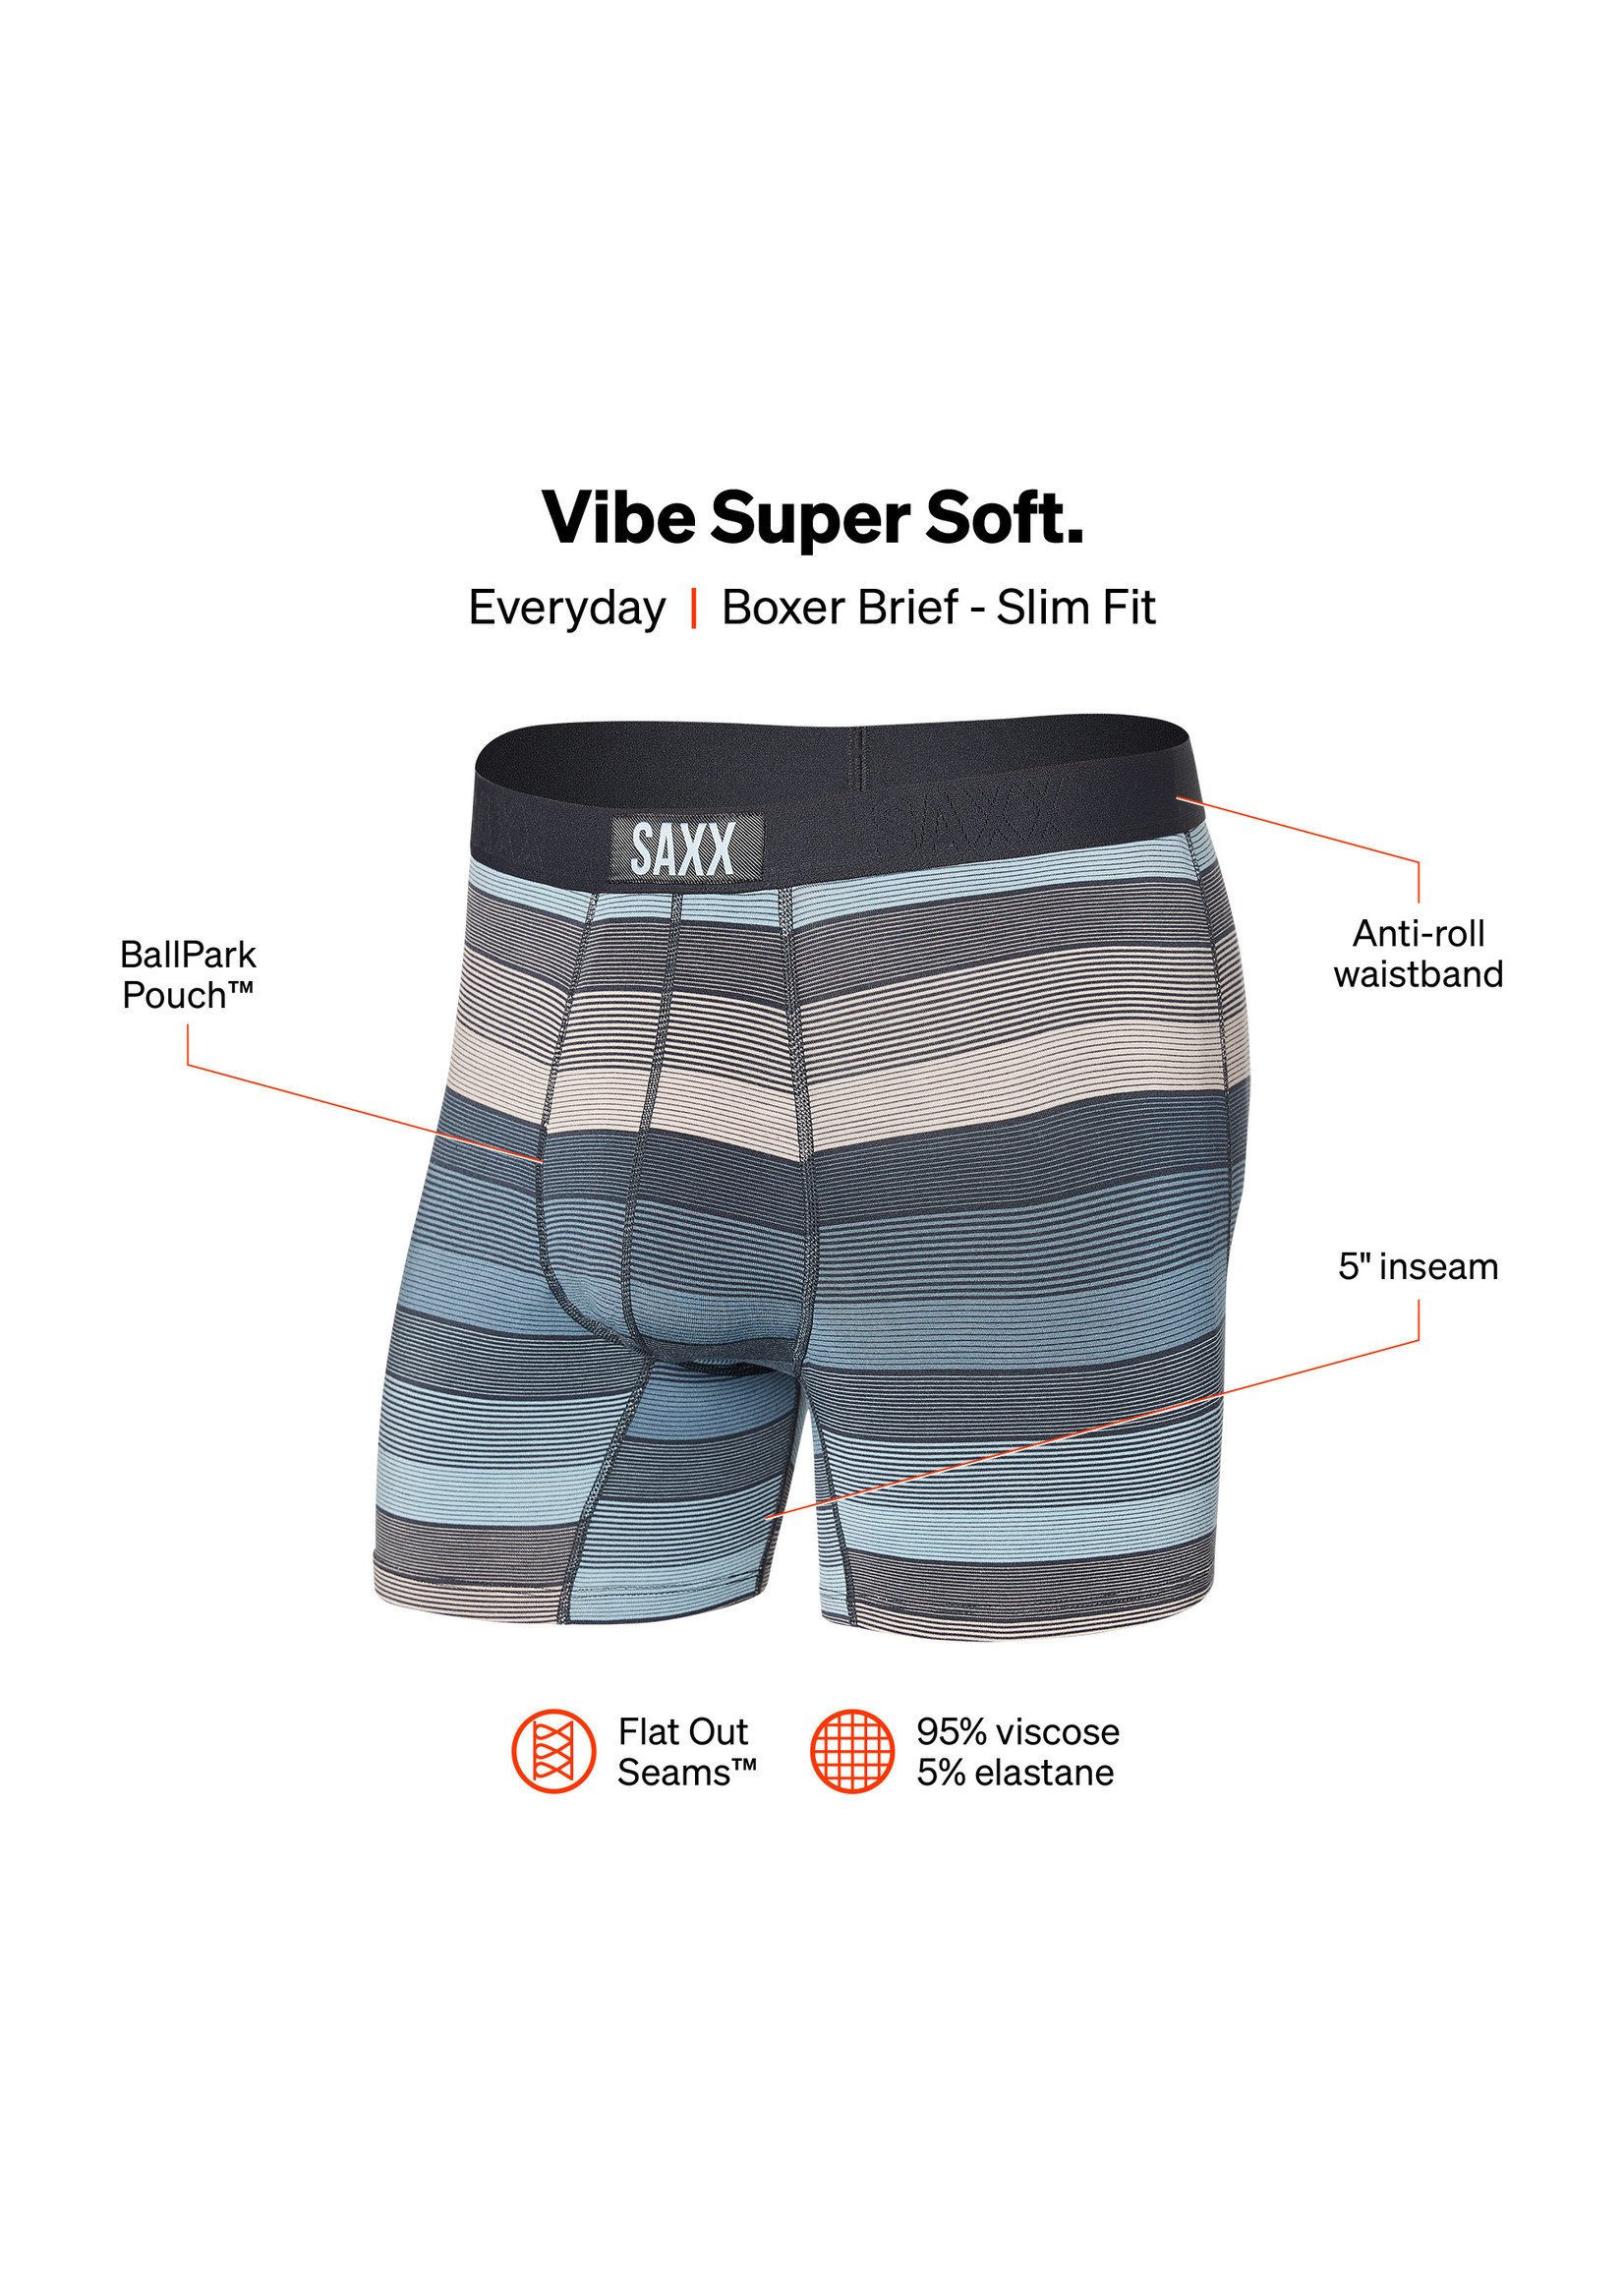  SAXX Men's Underwear - Vibe Super Soft Boxer Brief